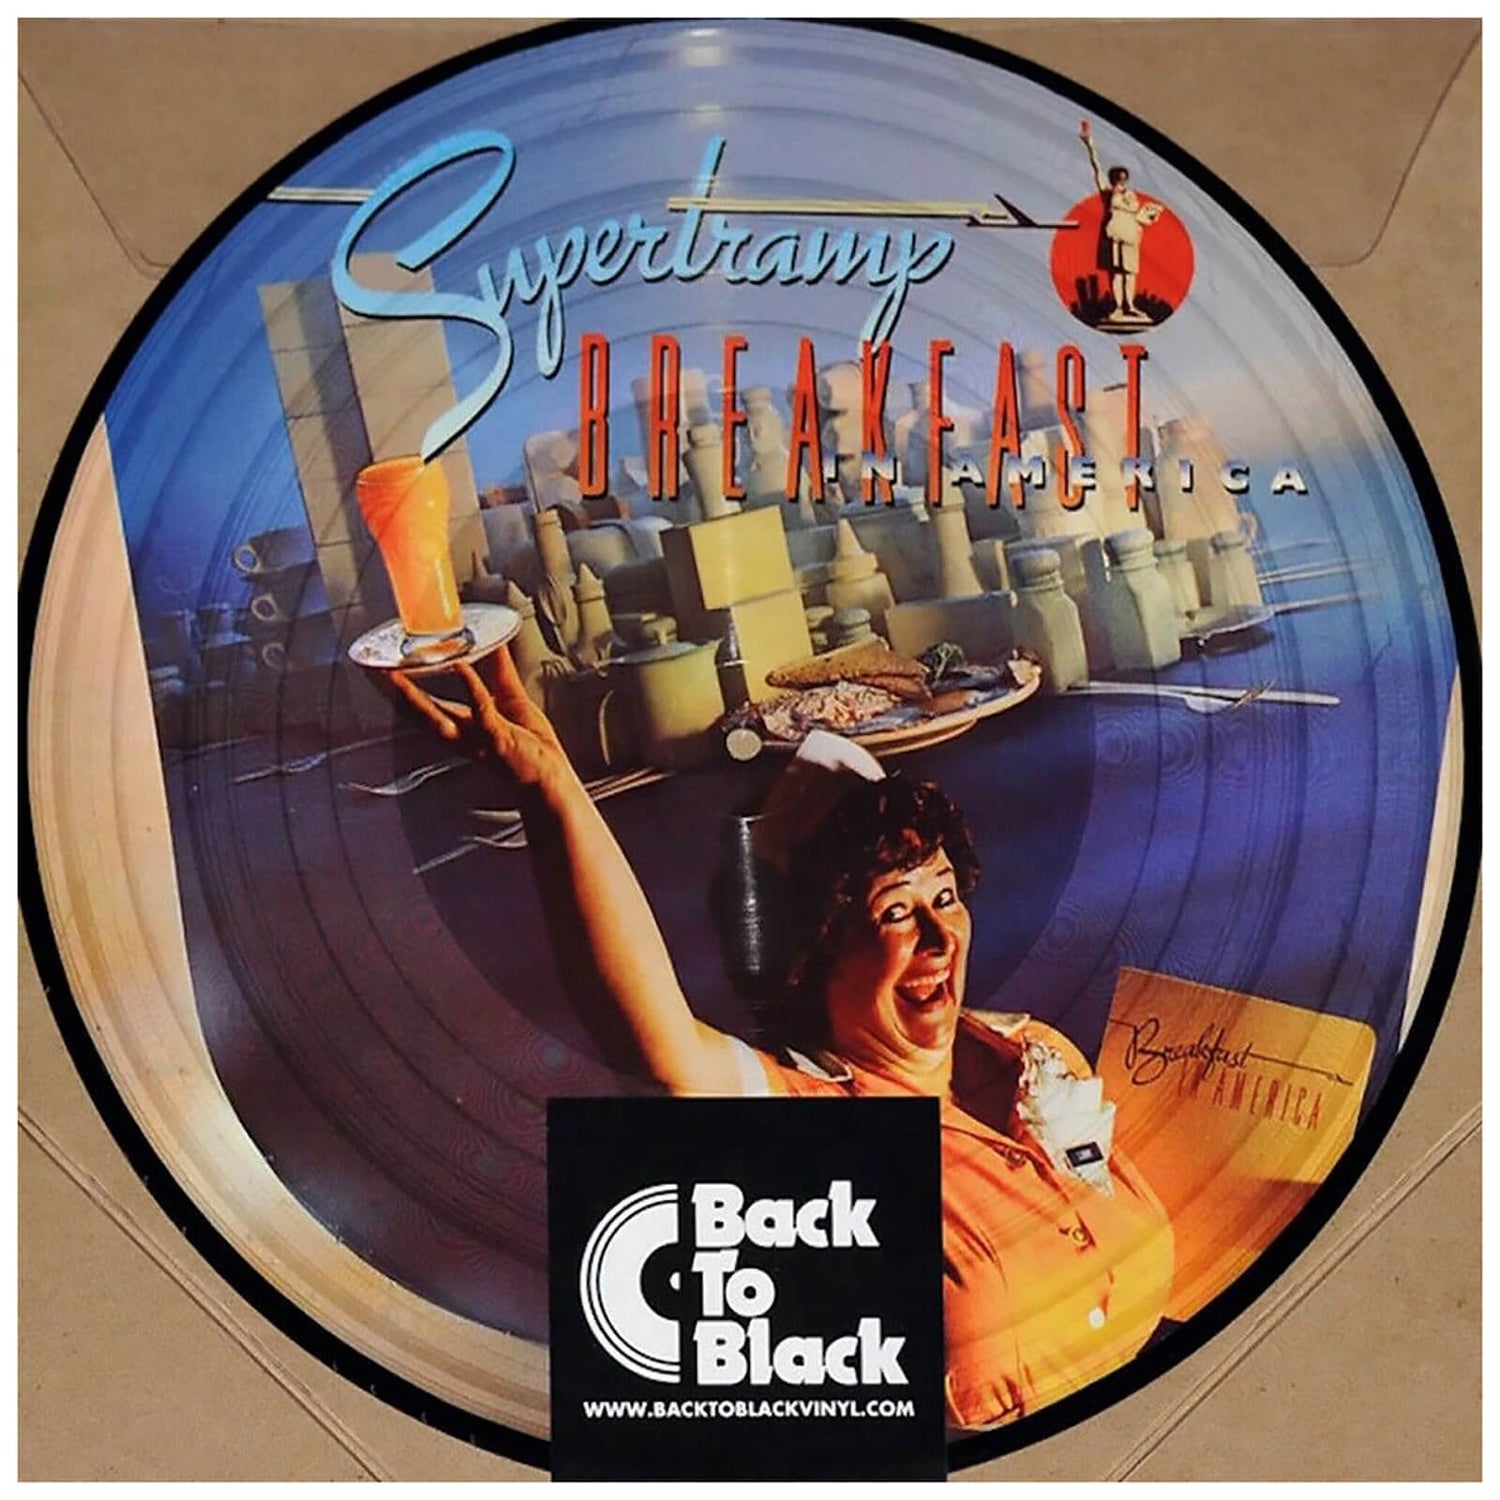 Supertramp - Breakfast In America 12 Inch Vinyl